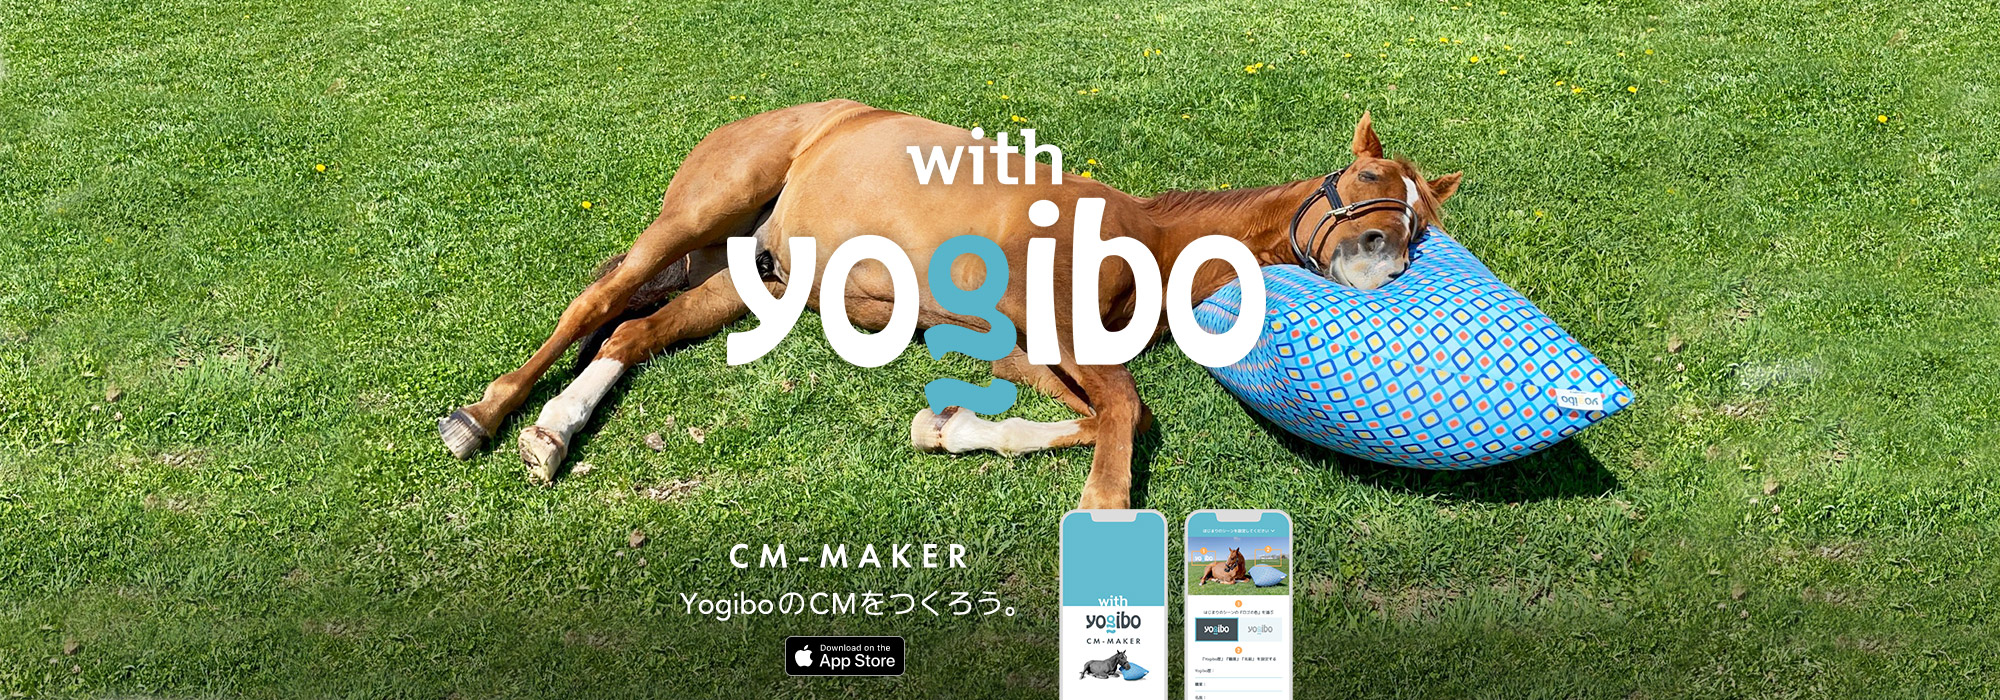 with Yogibo - WE ARE yogibo USERS.